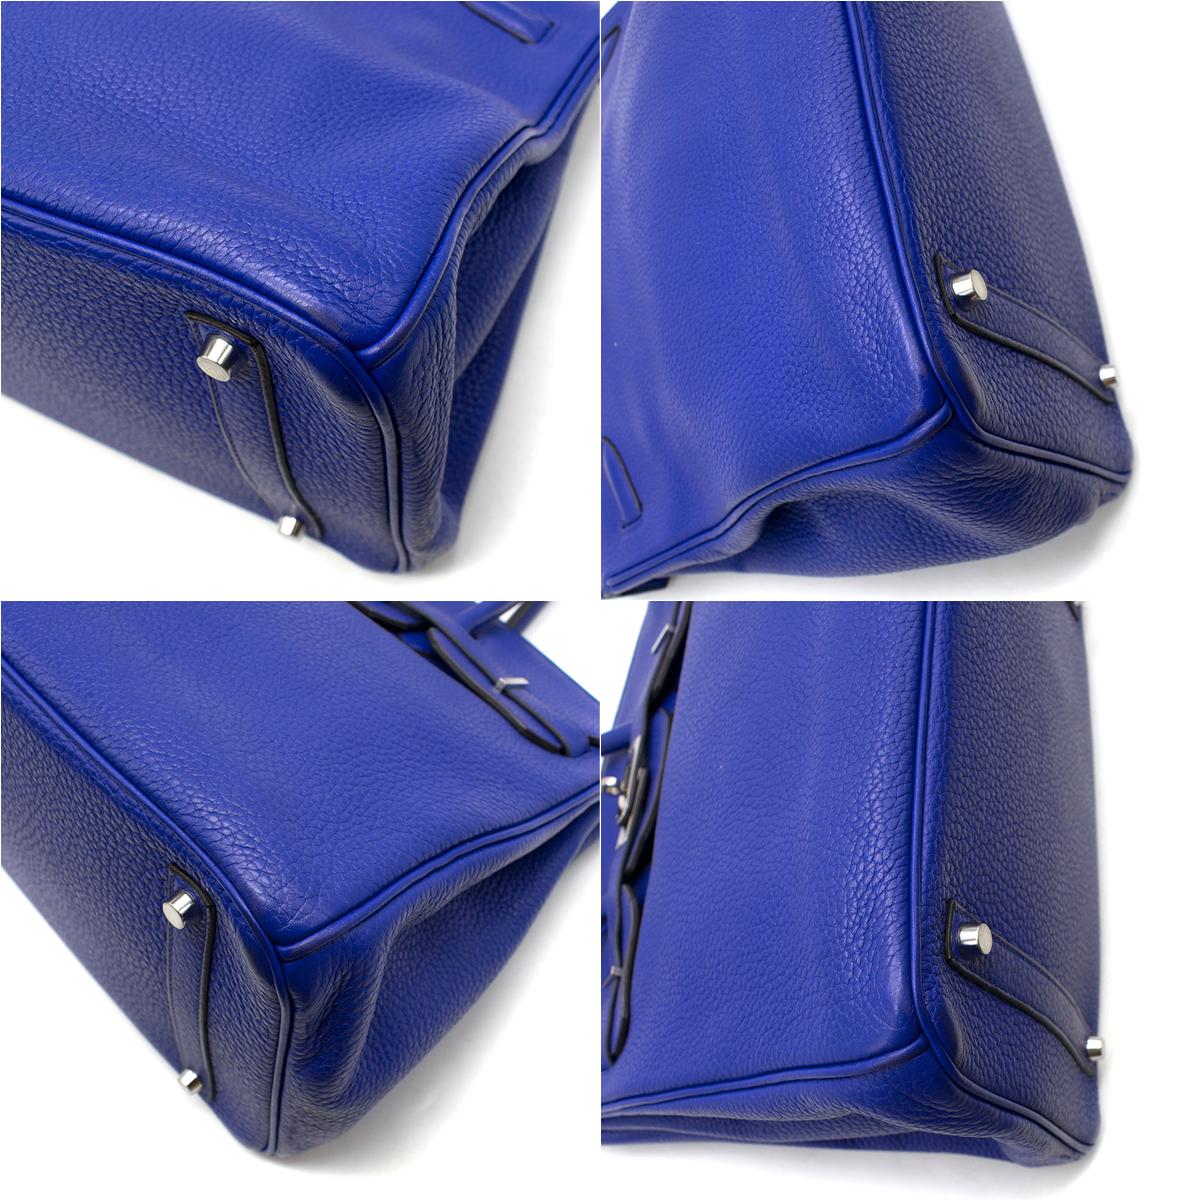 Hermes Blue Sapphire Togo leather Birkin 35cm 3